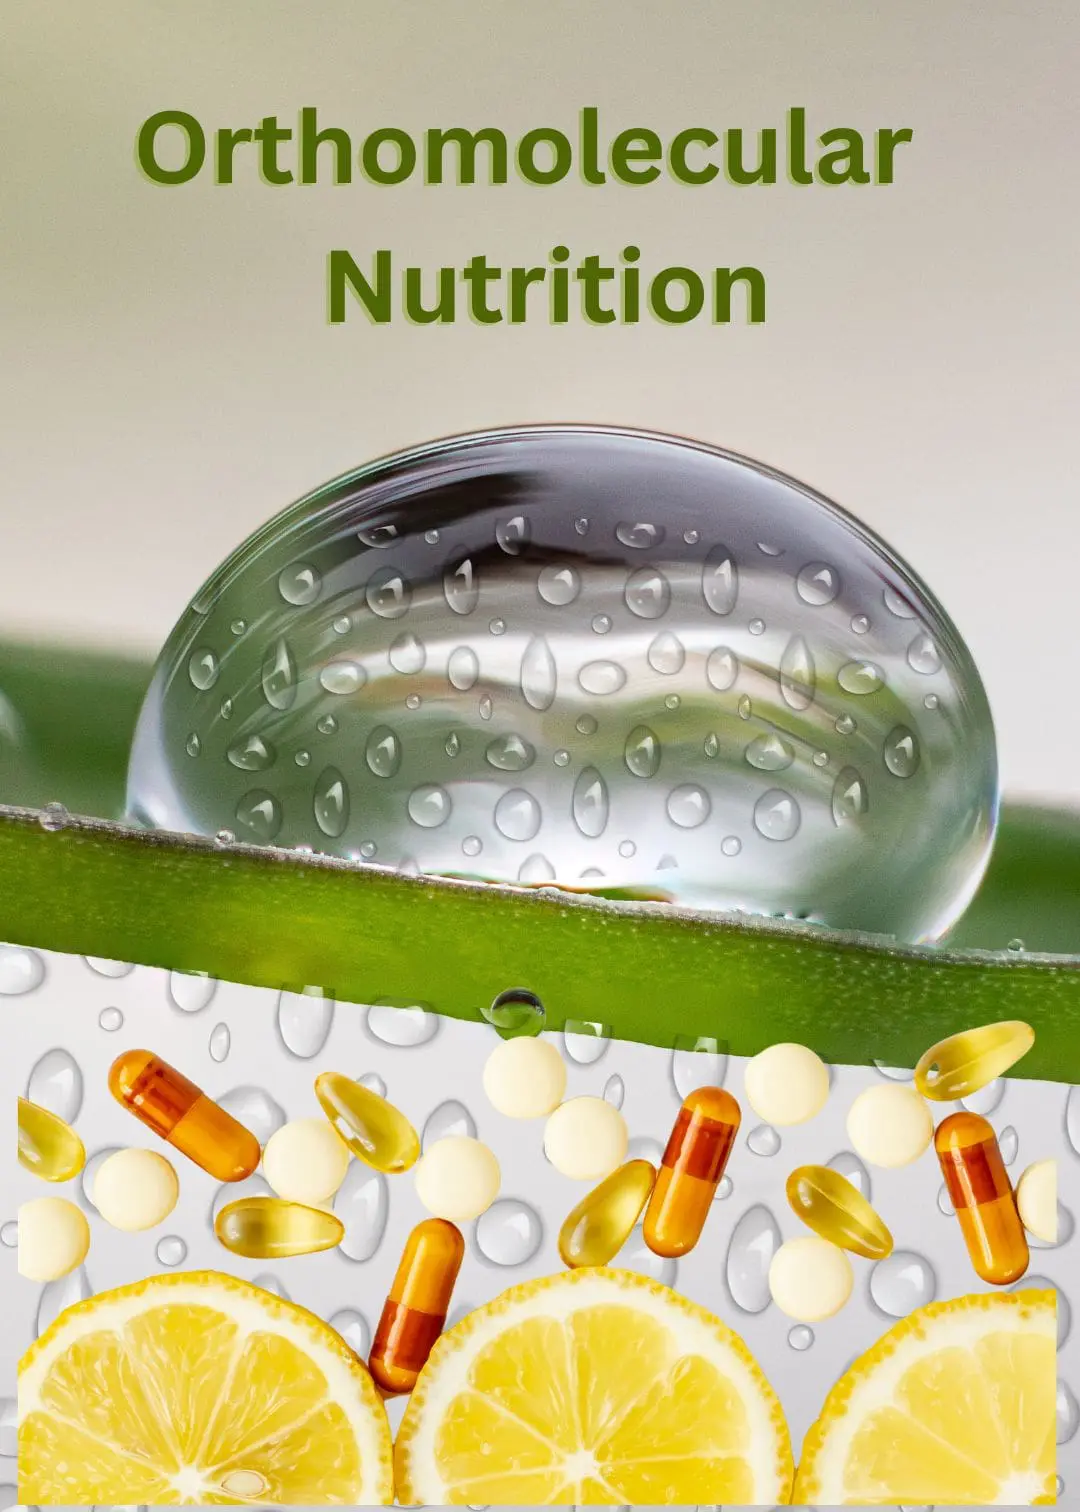 Orthomolecular Nutrition | Edison Institute of Nutrition | Online Nutrition School